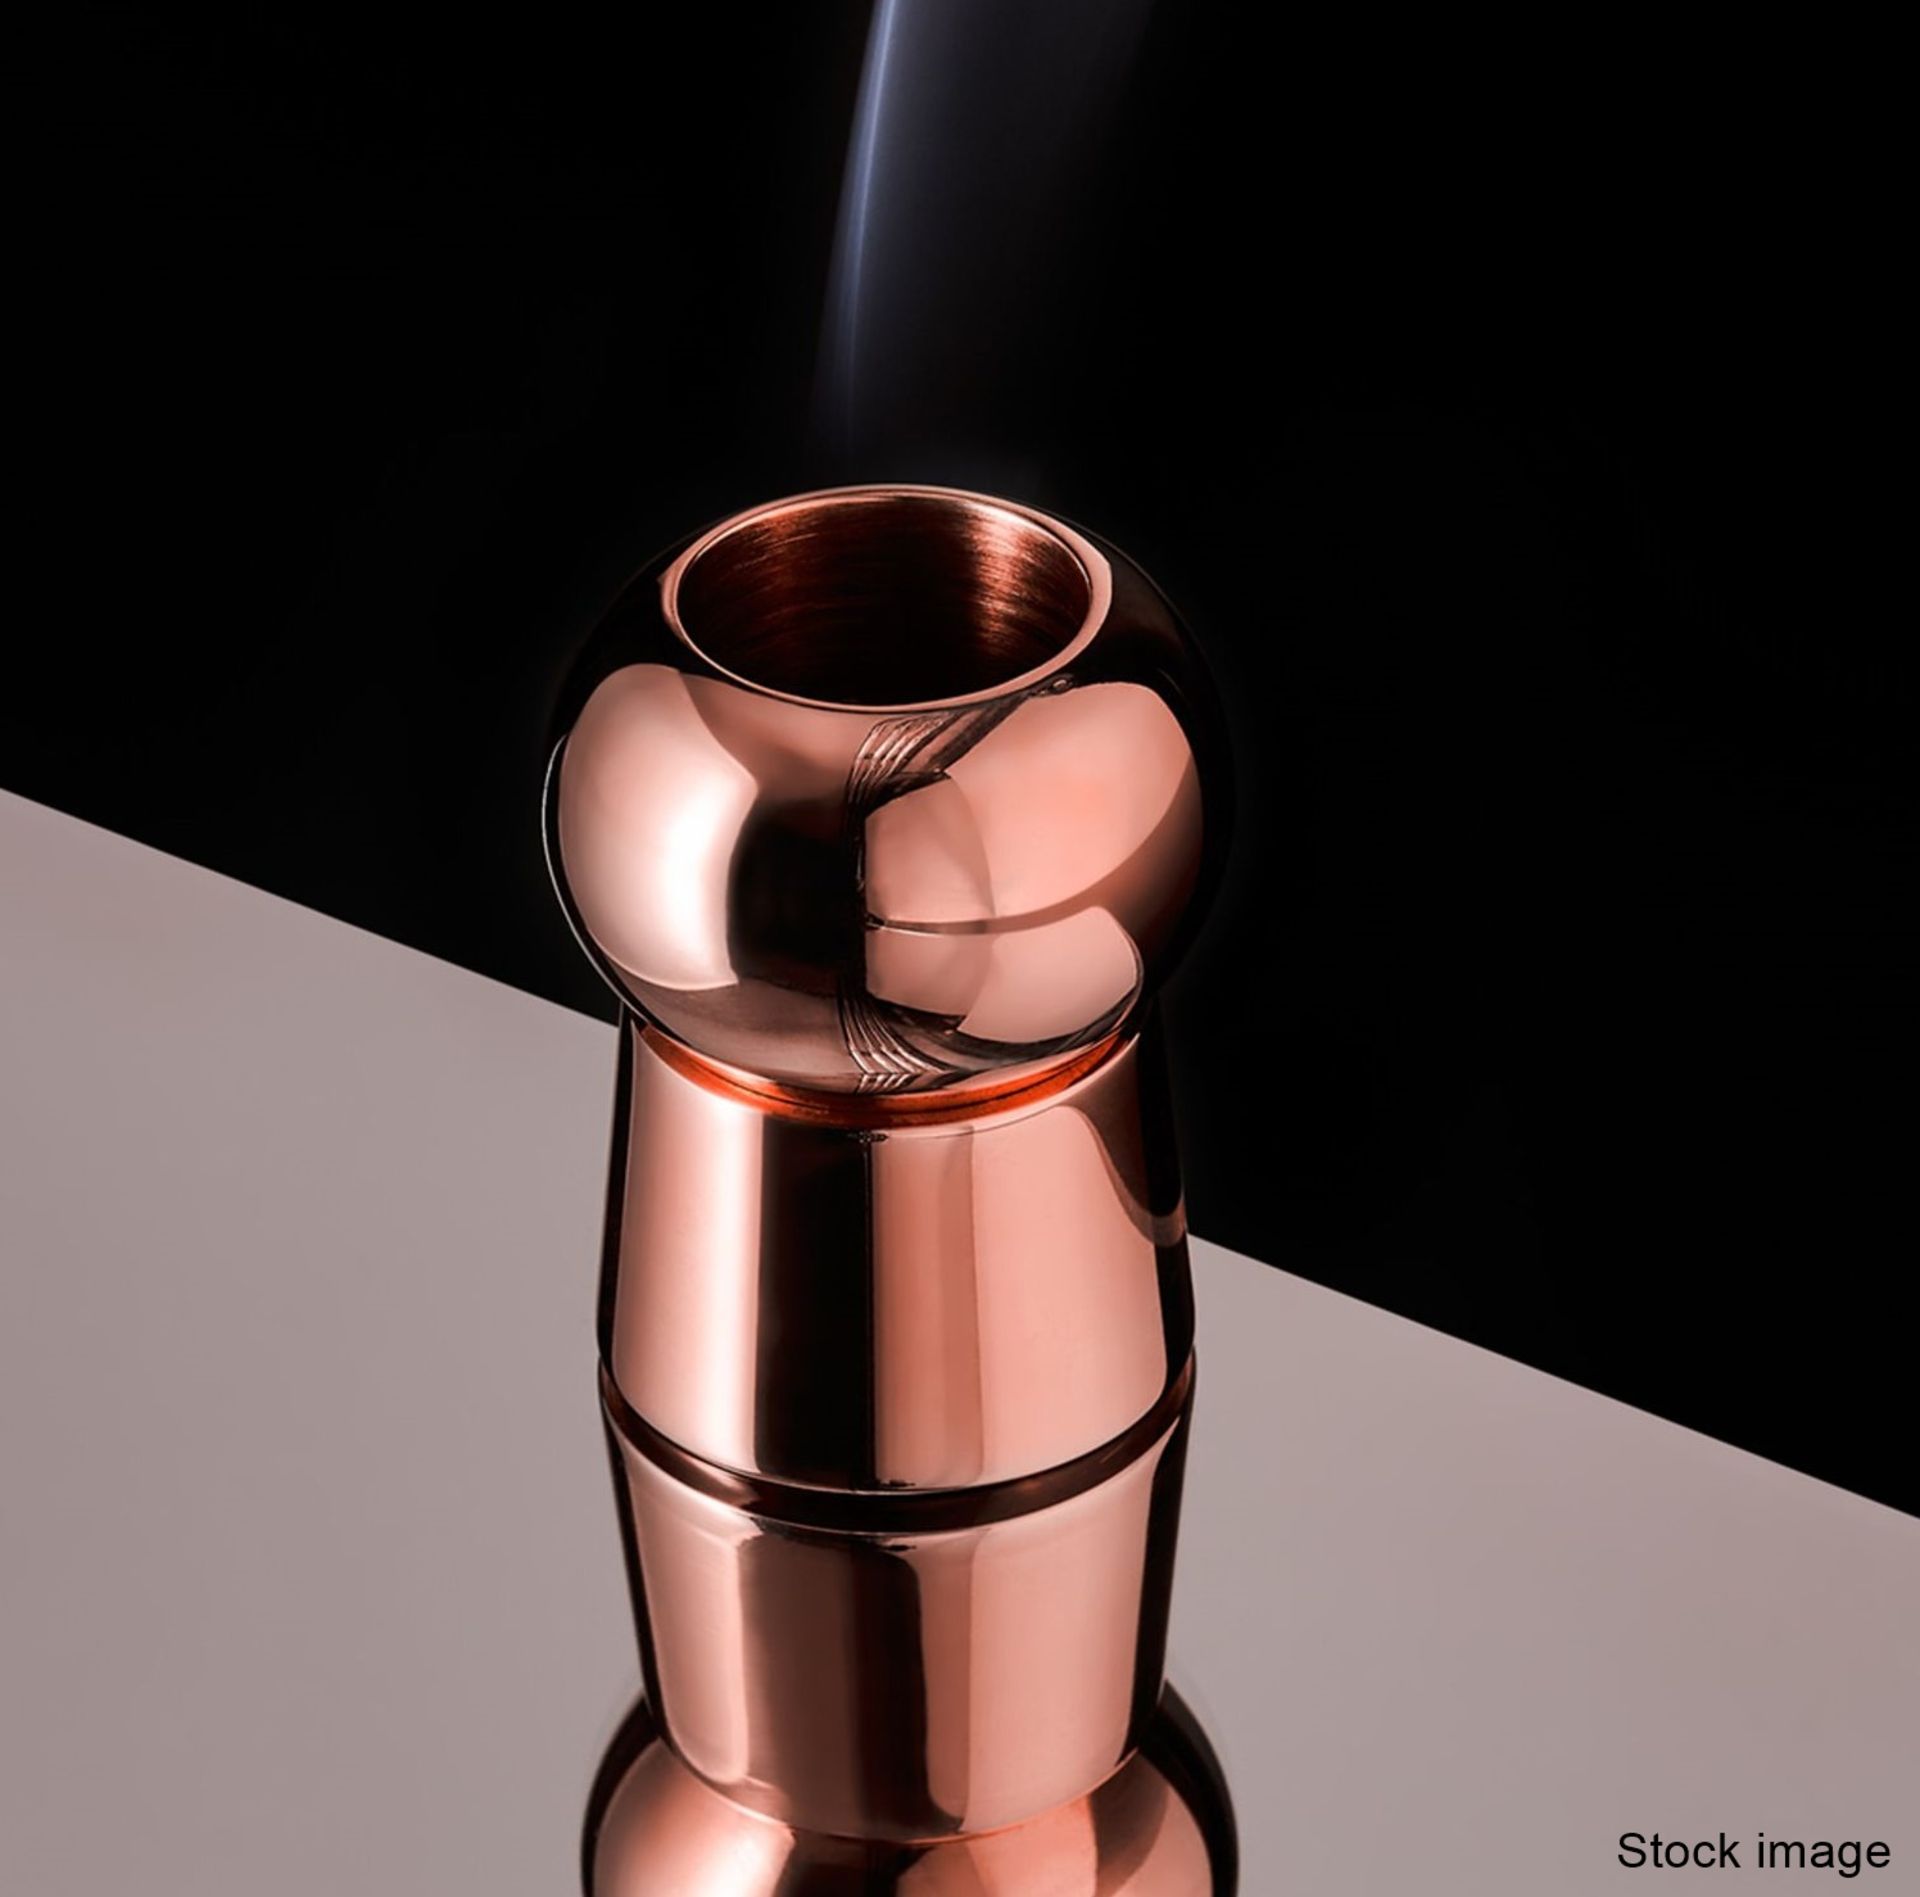 1 x TOM DIXON 'Fog London' Designer Incense Gift Set, Handcrafted In Copper - Original Price £50.00